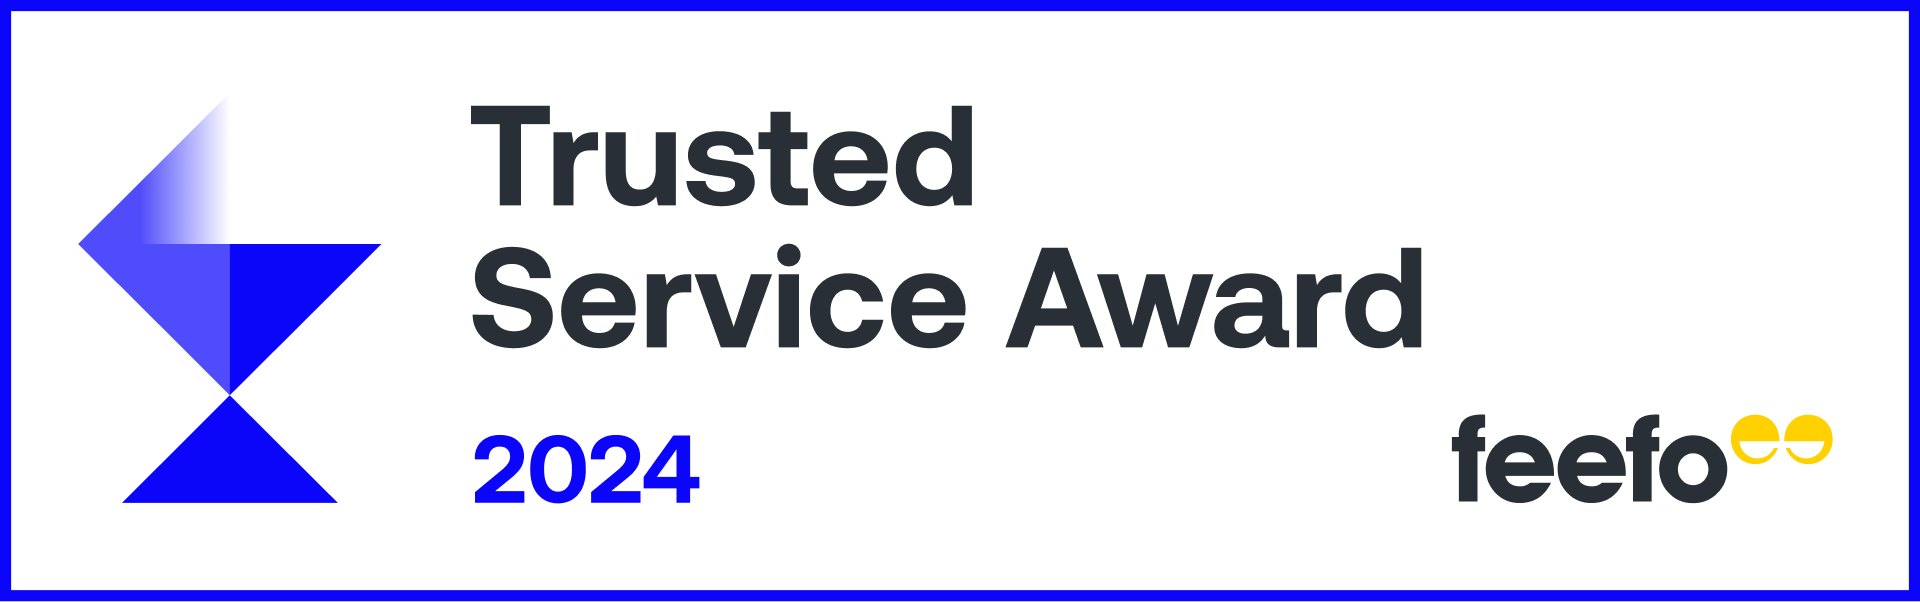 2024T rusted Service Award badge from feefo.com